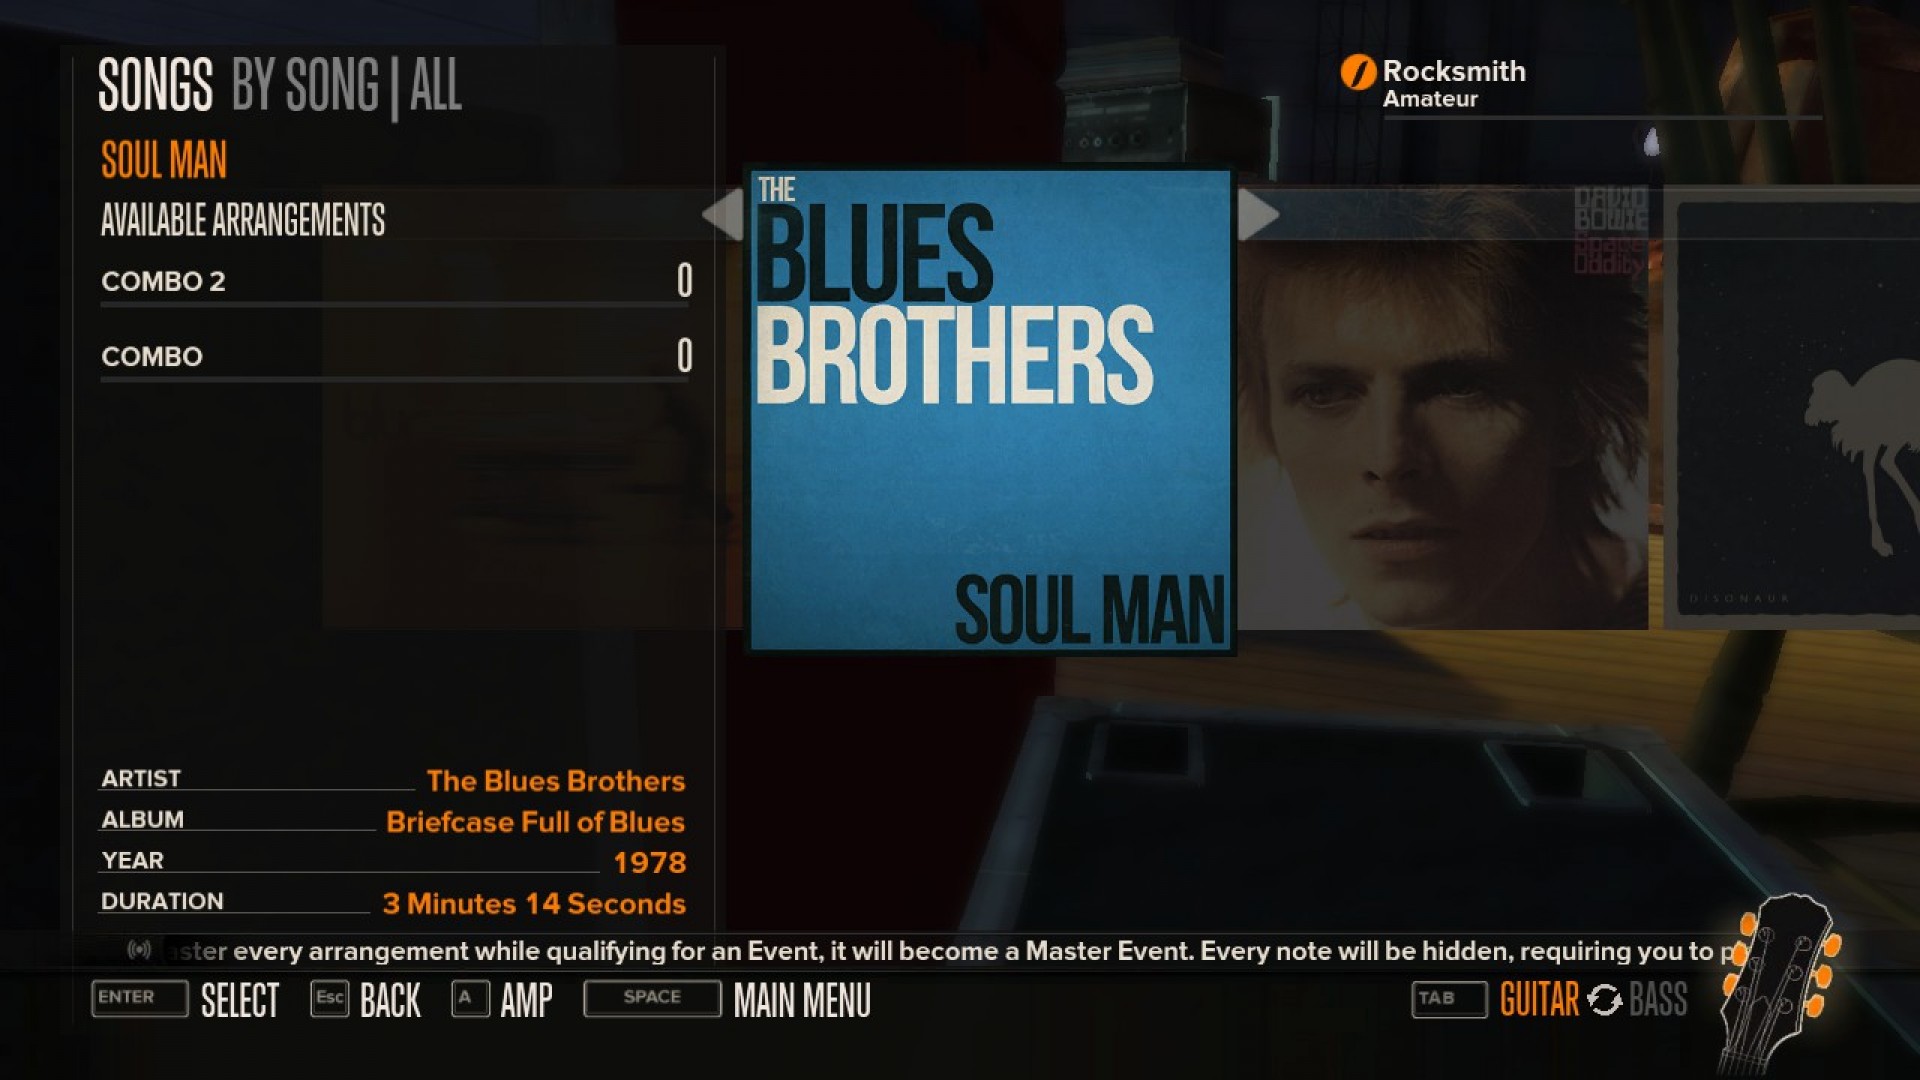 Rocksmith - The Blues Brothers Band - Soul Man screenshot